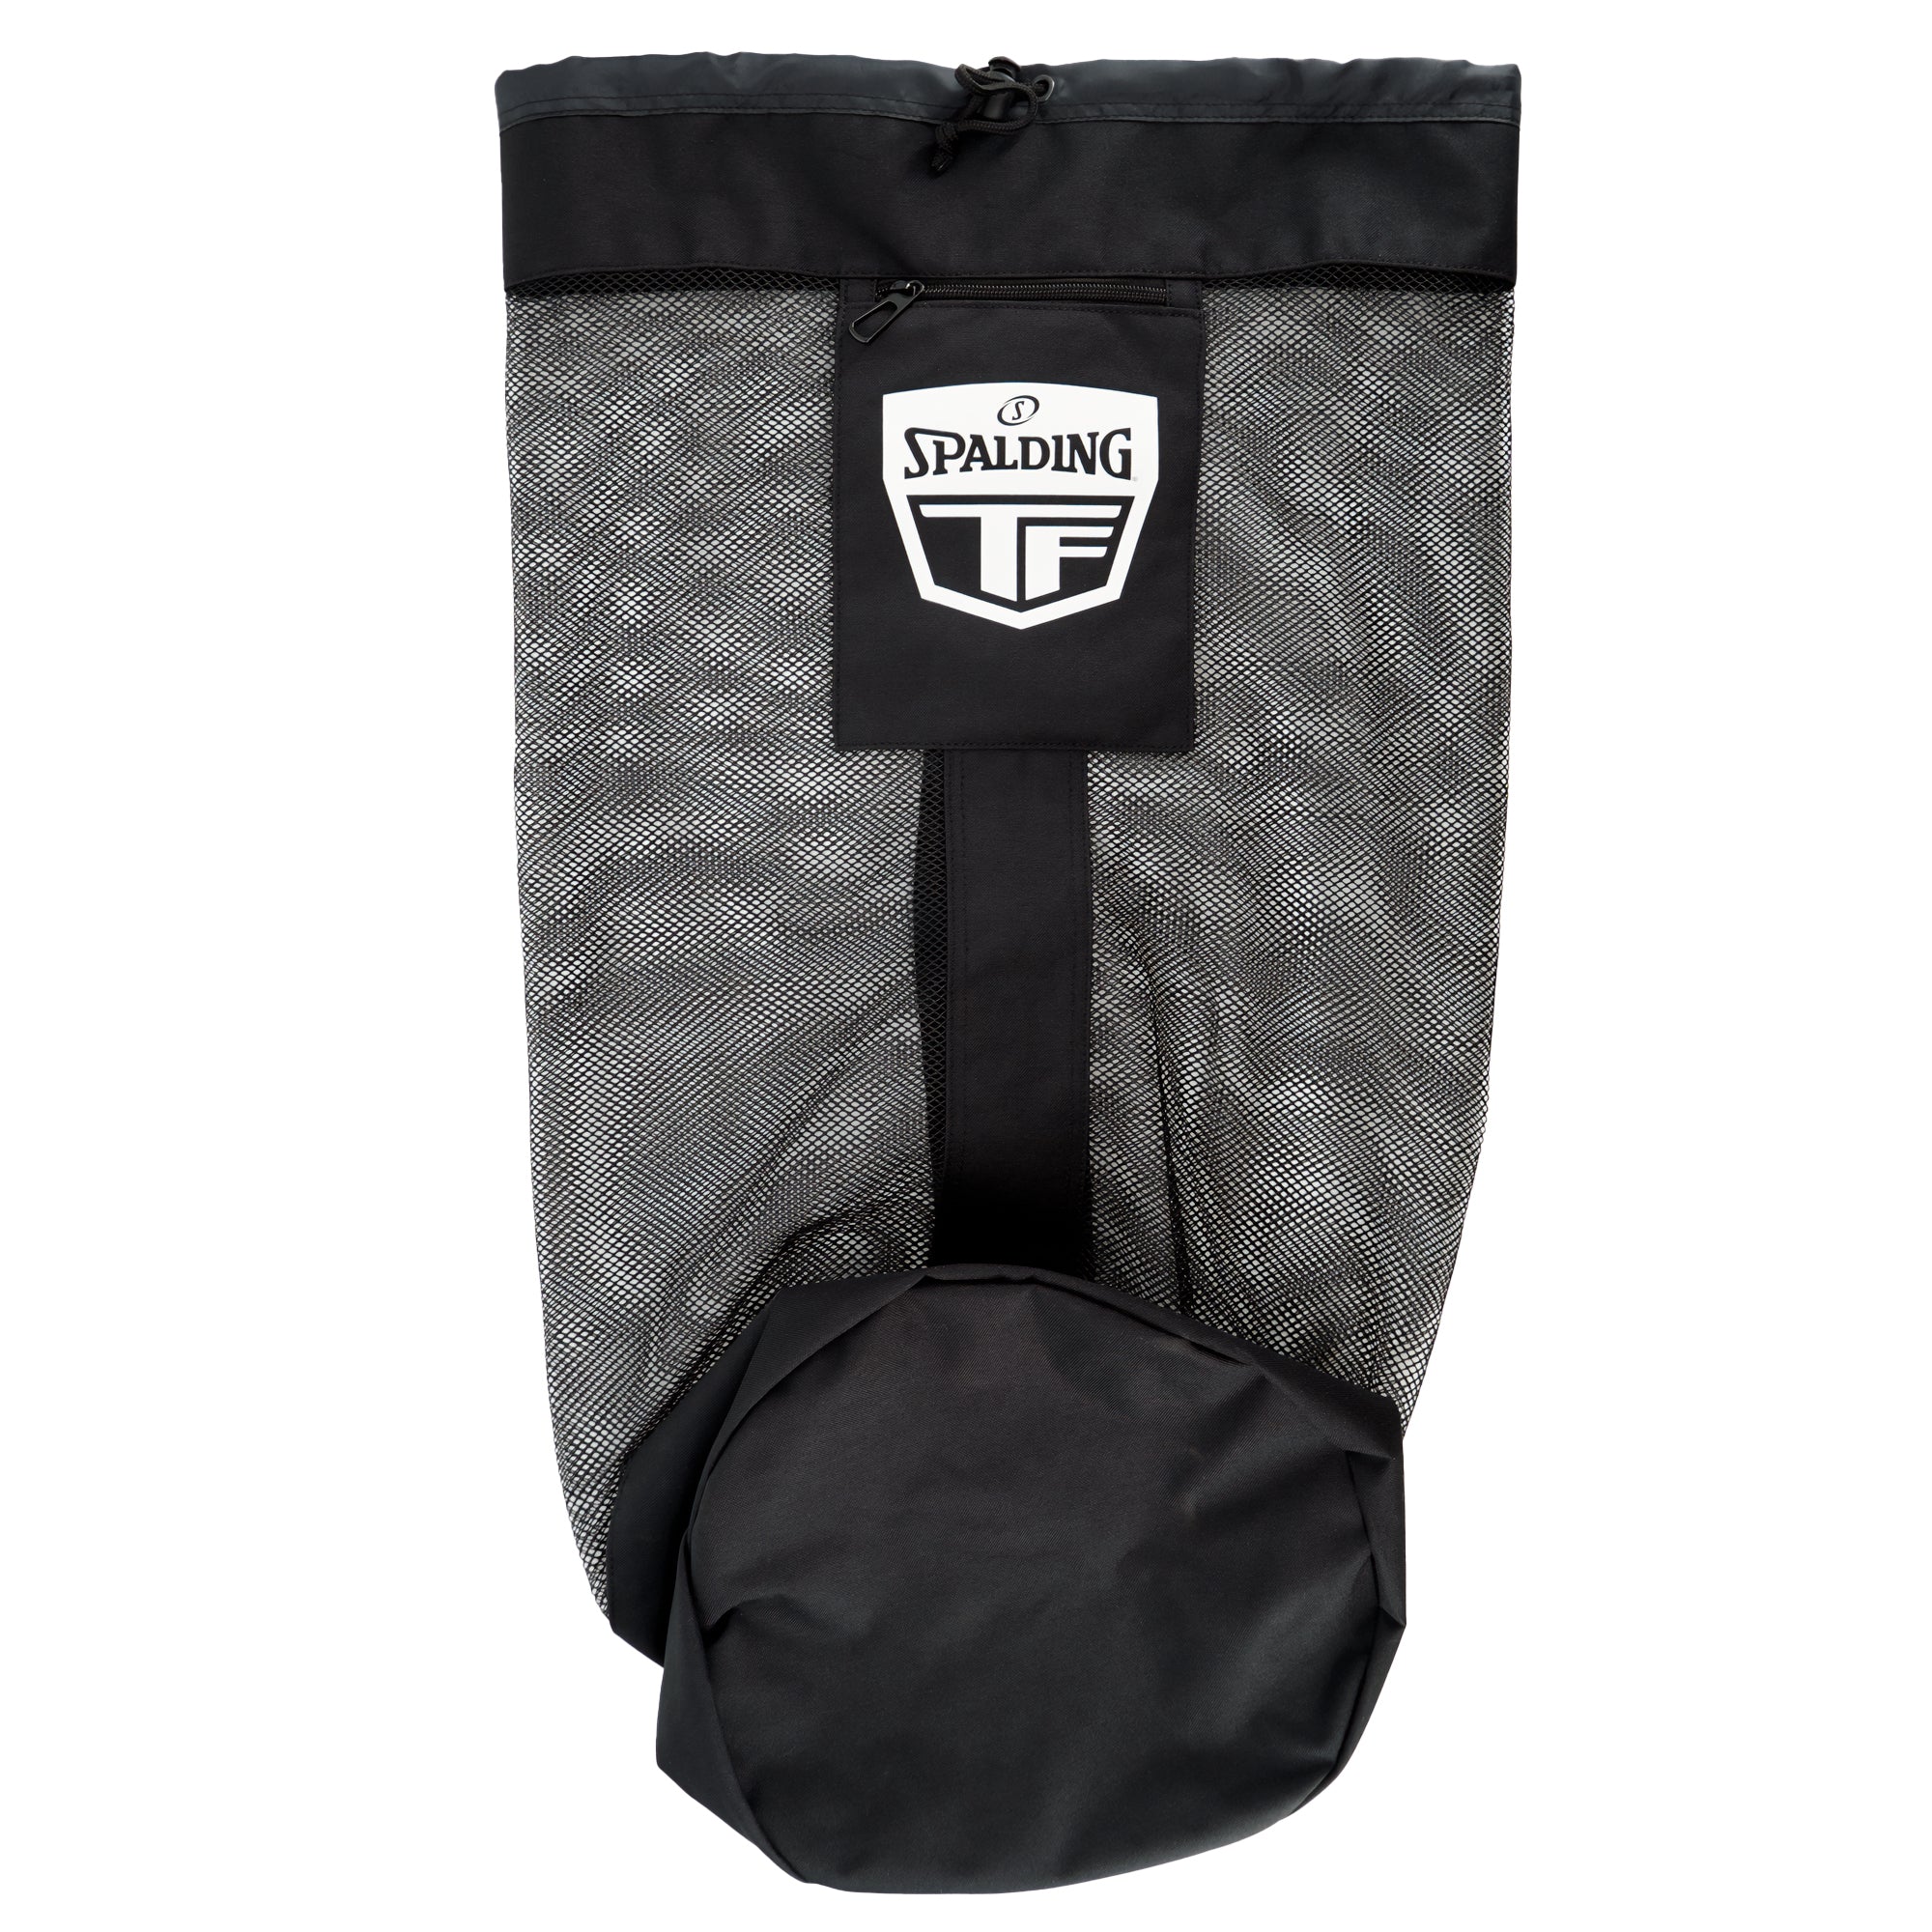 Spalding TF 3-Ball Travel Basketball Bag - Black Spalding